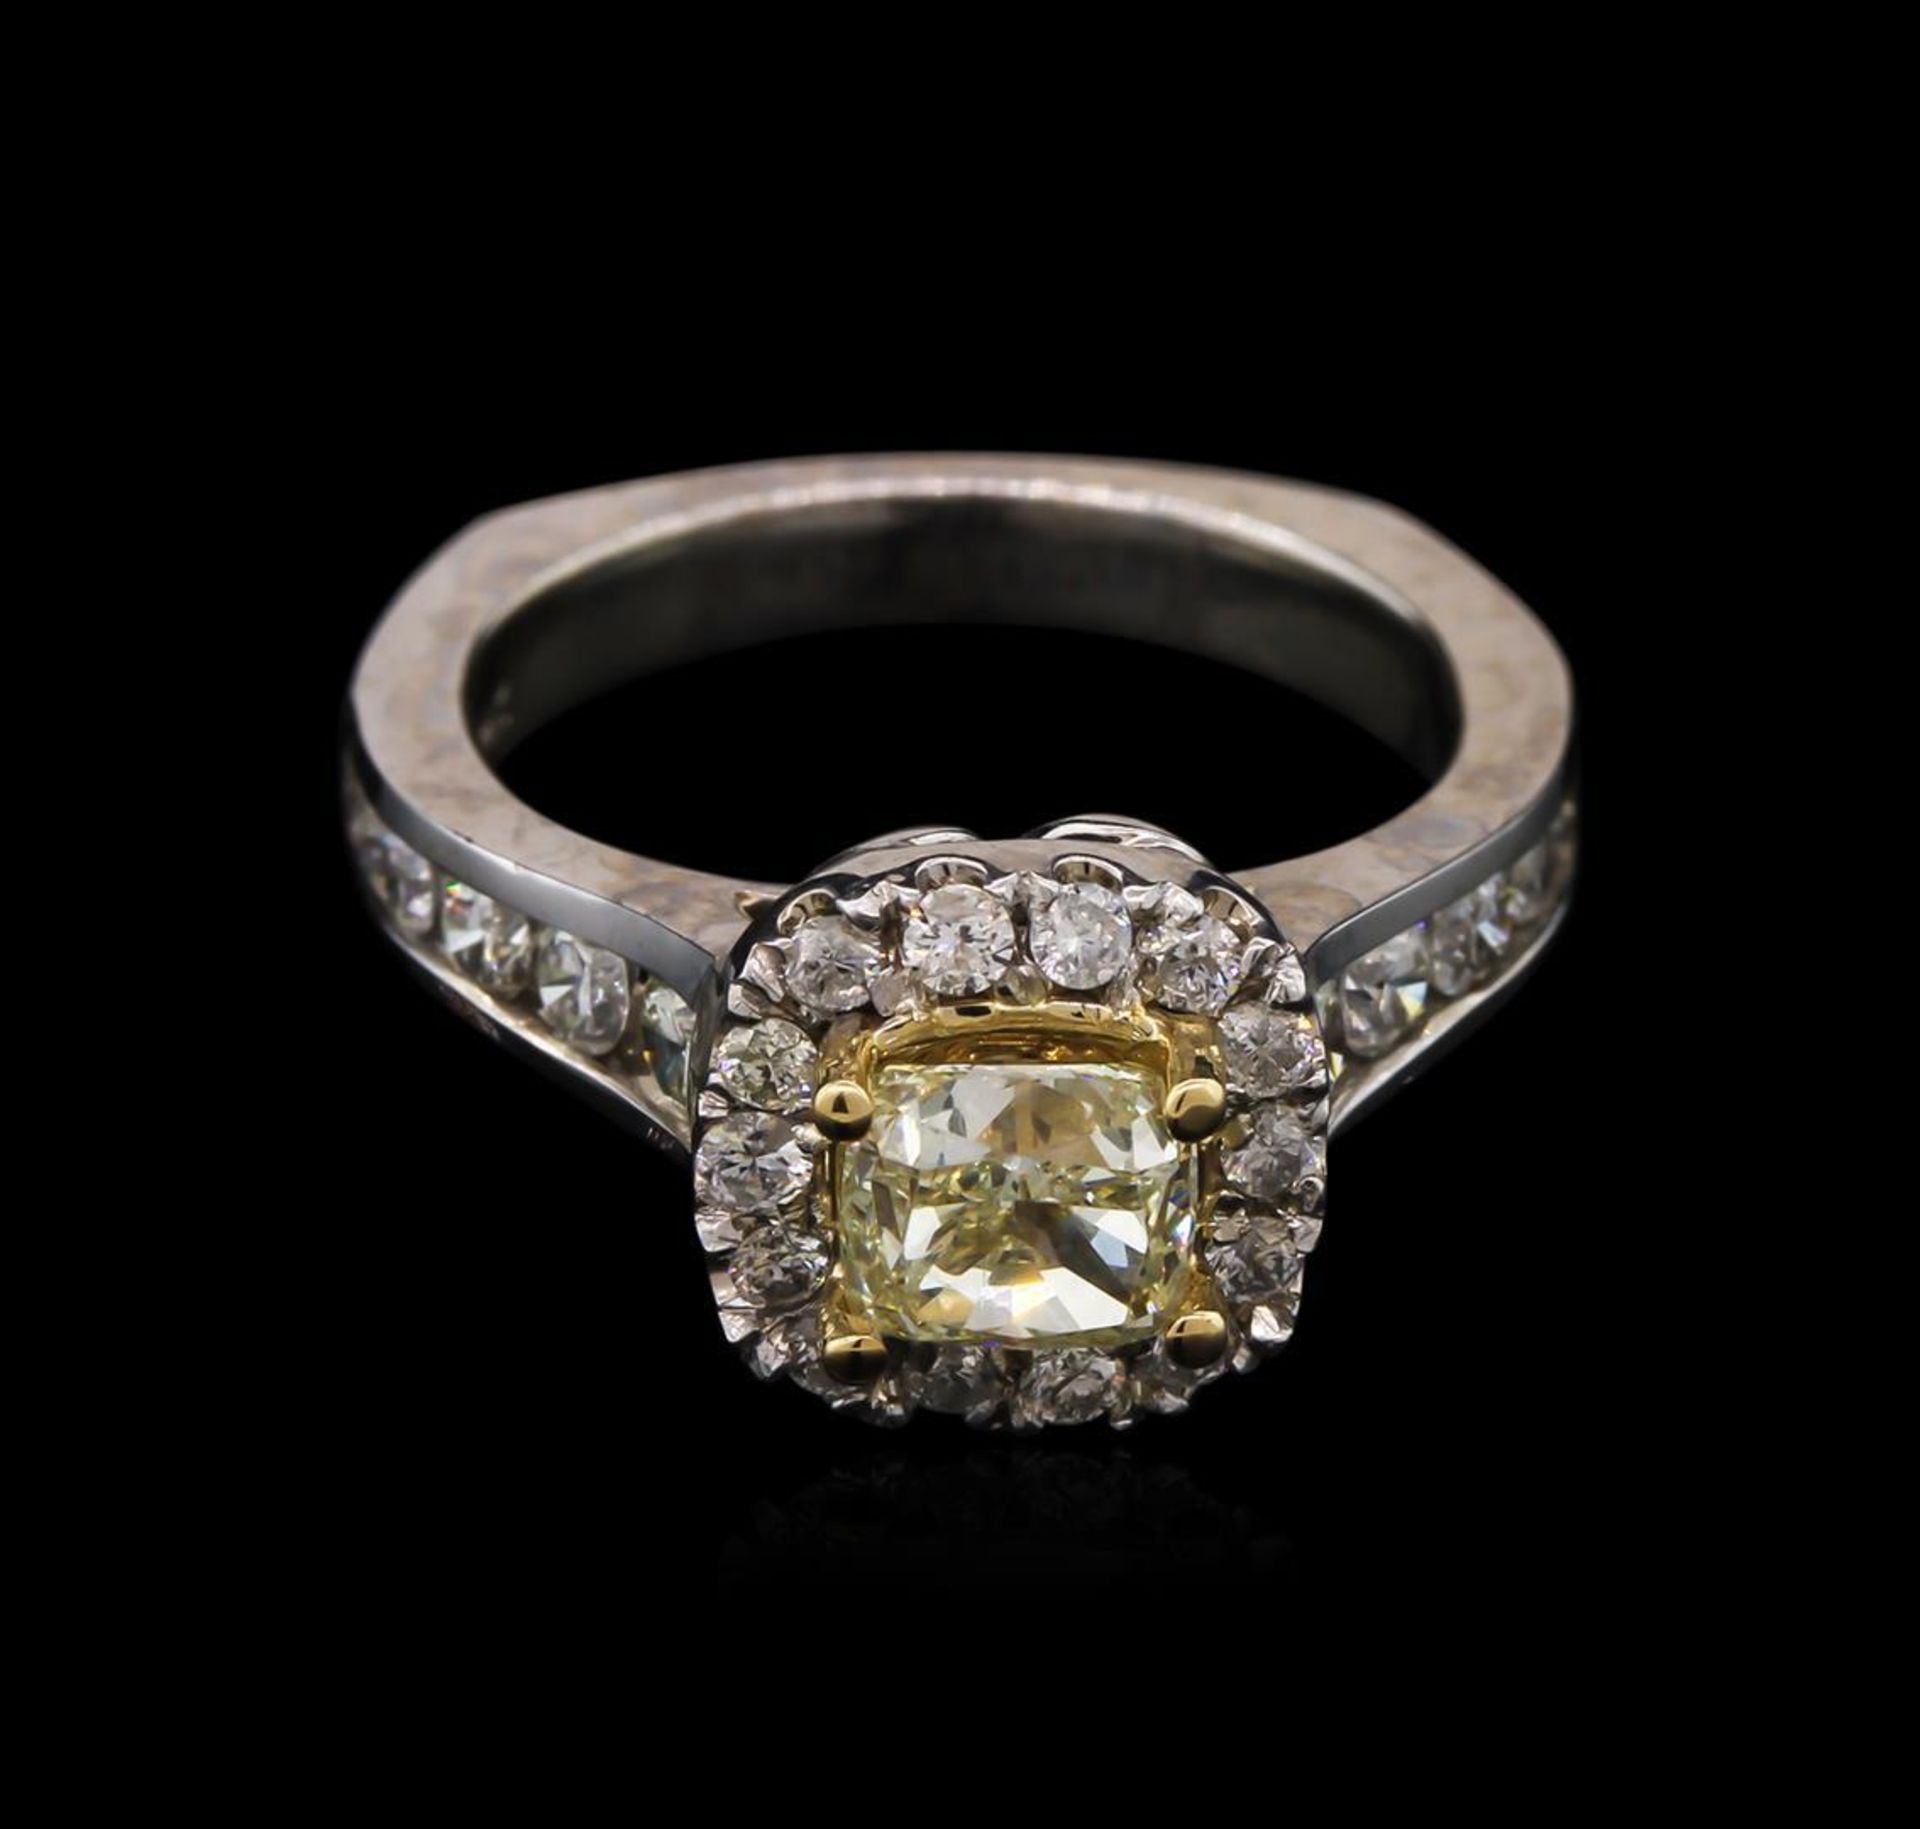 2.07 ctw Light Yellow Diamond Ring - 14KT White Gold - Image 2 of 3